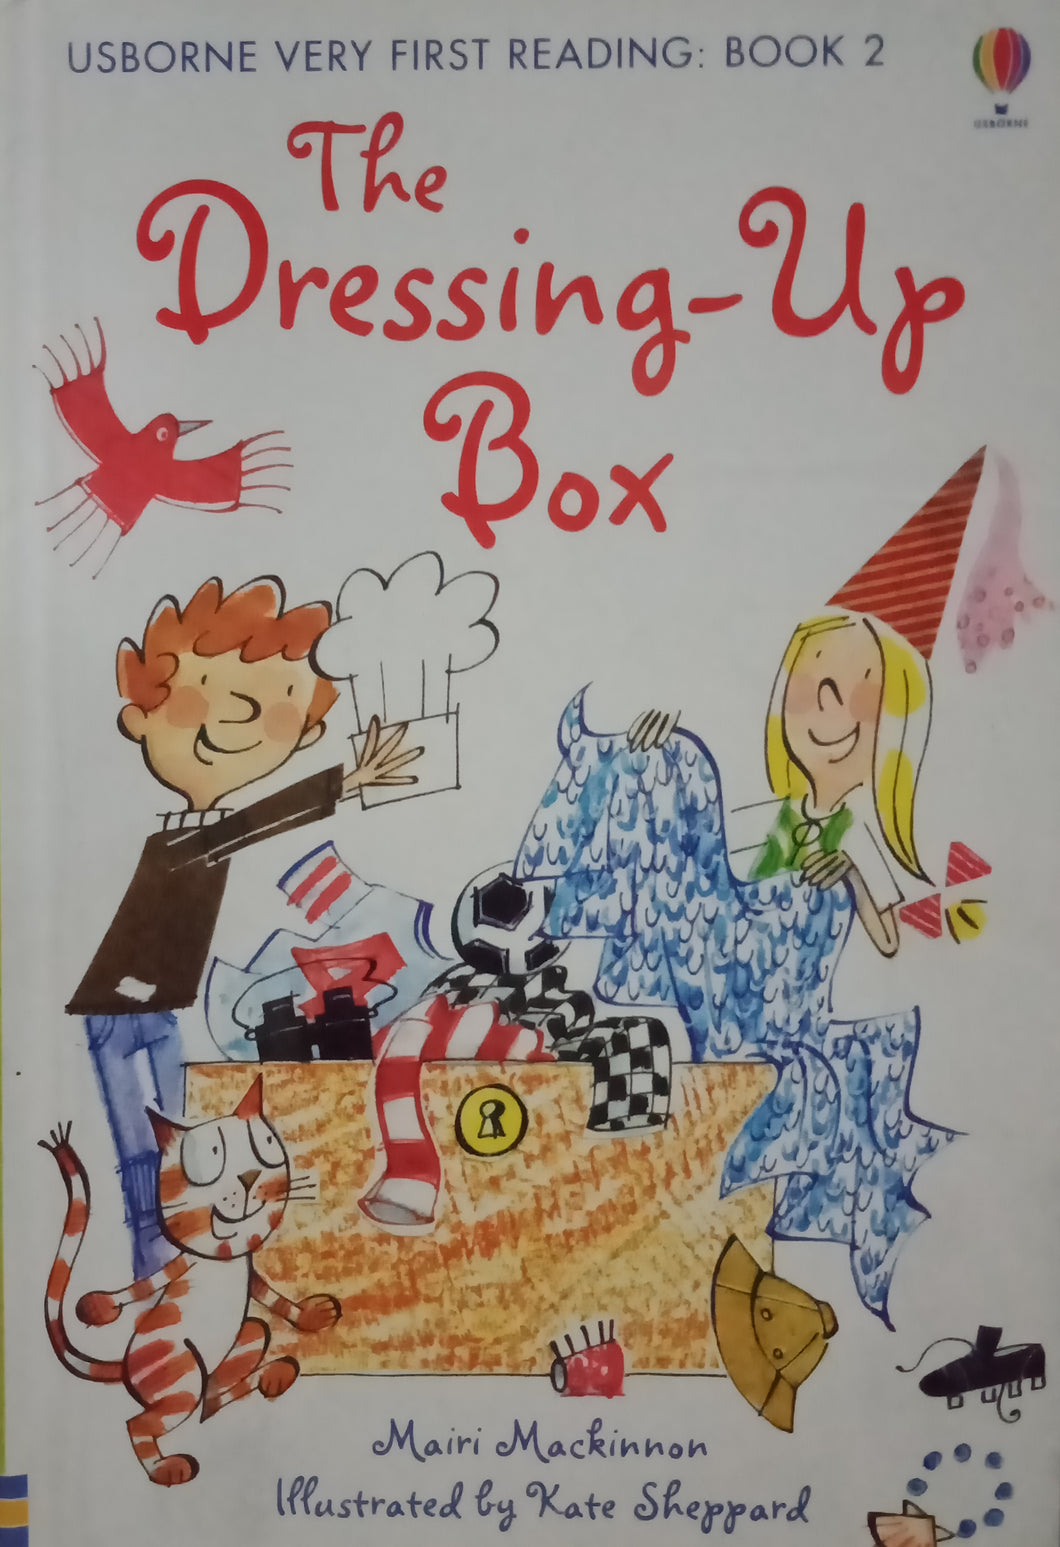 The Dressing-Up Box By Mairi Mackinnon